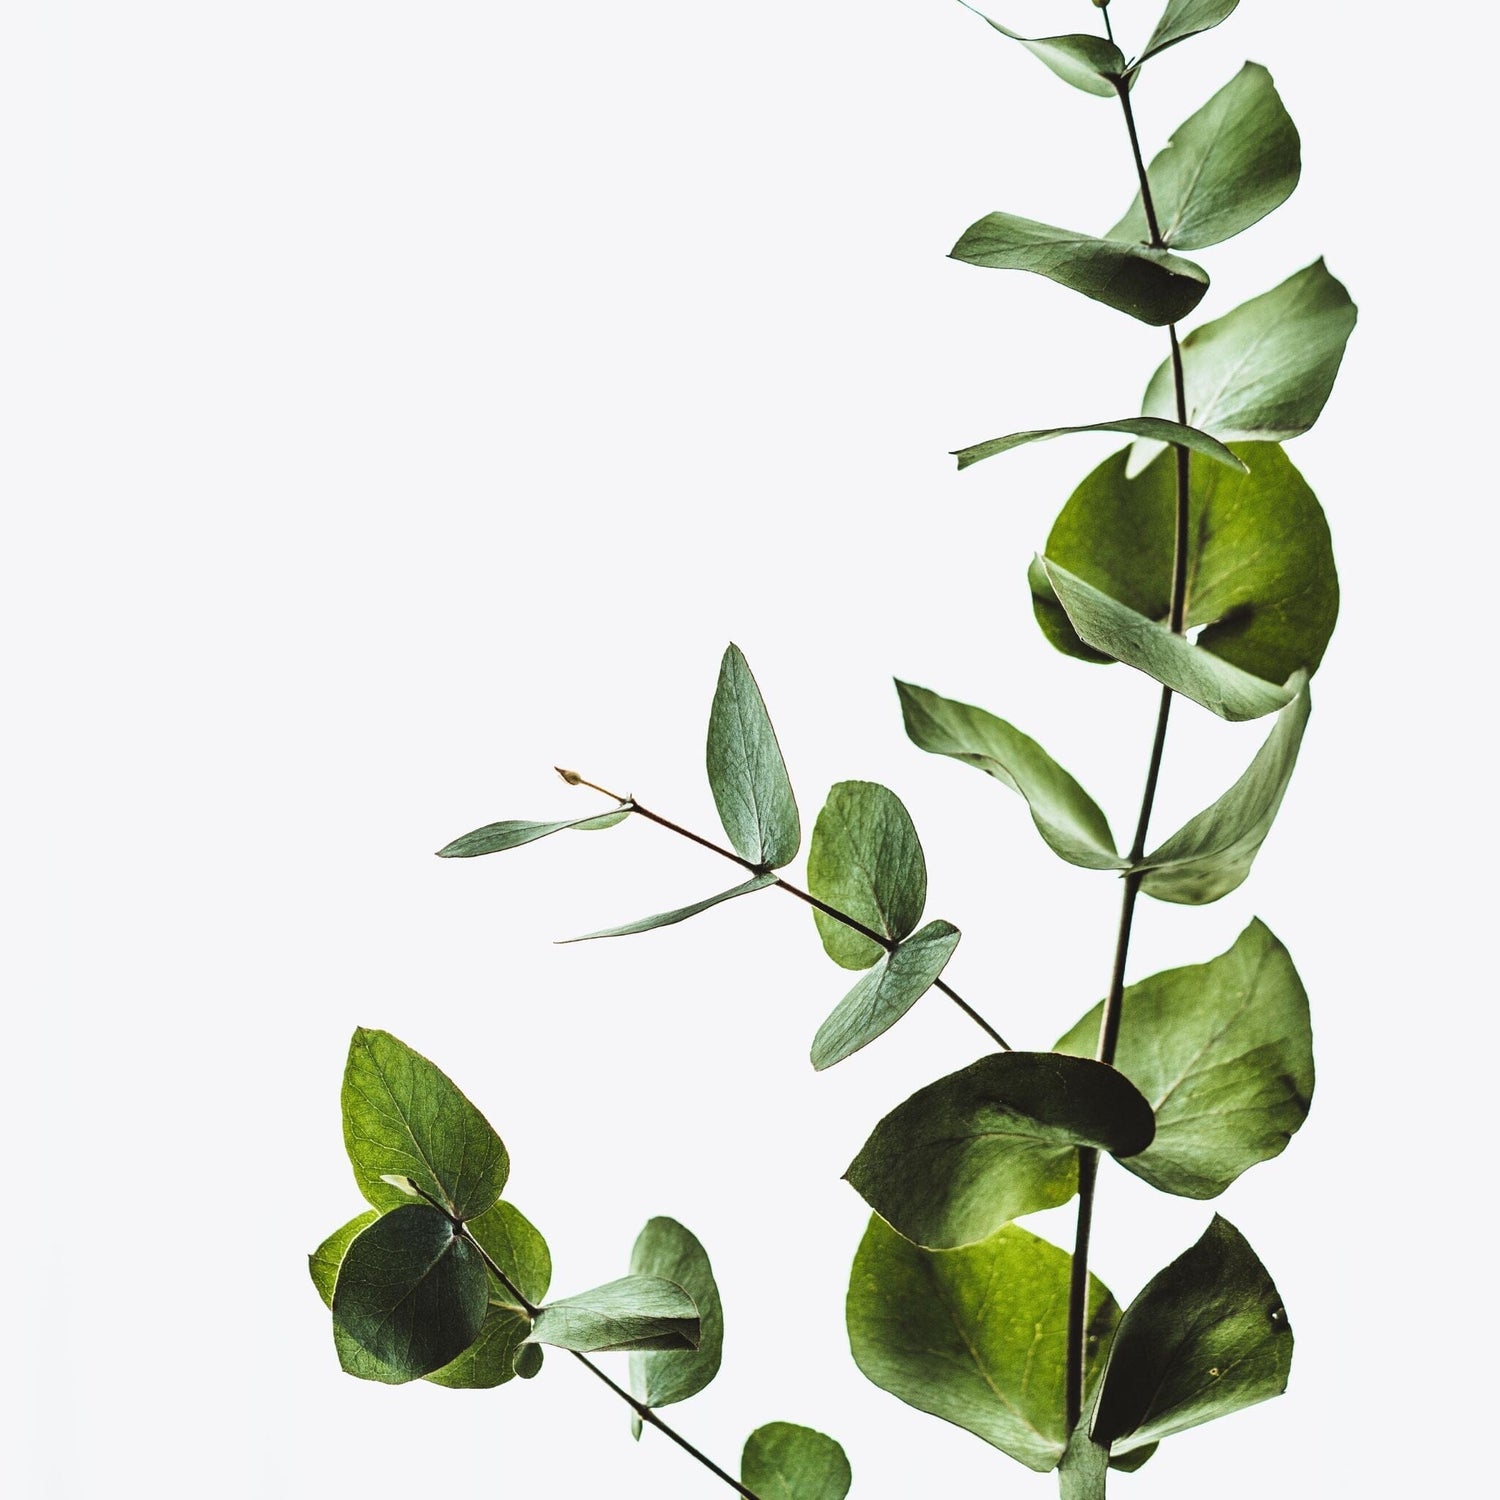 Eucalyptus plant with white background